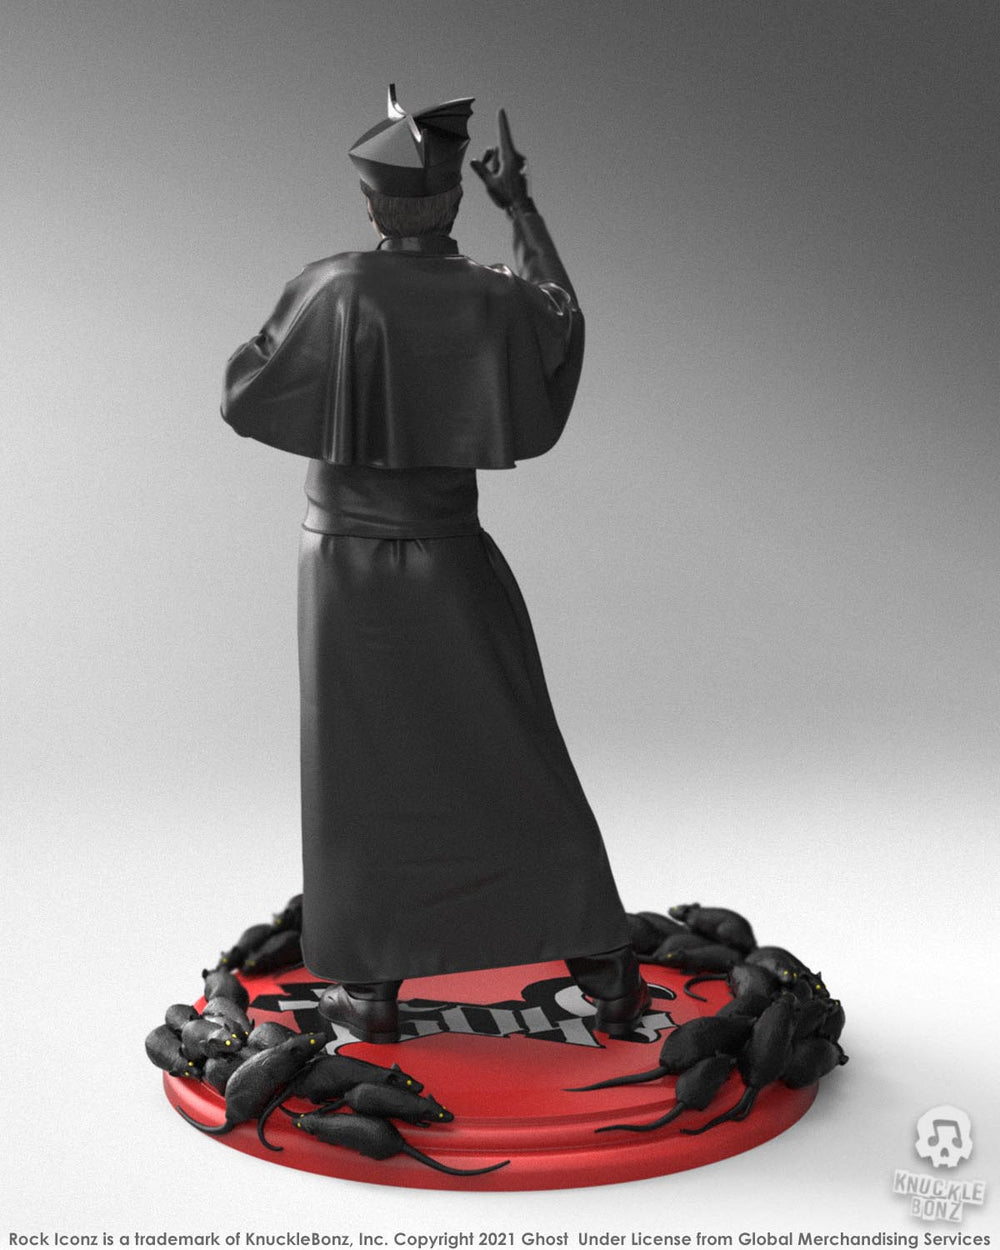 Ghost 2021 KnuckleBonz Rock Iconz Statue Cardinal Copia Black Tuxedo -Variant